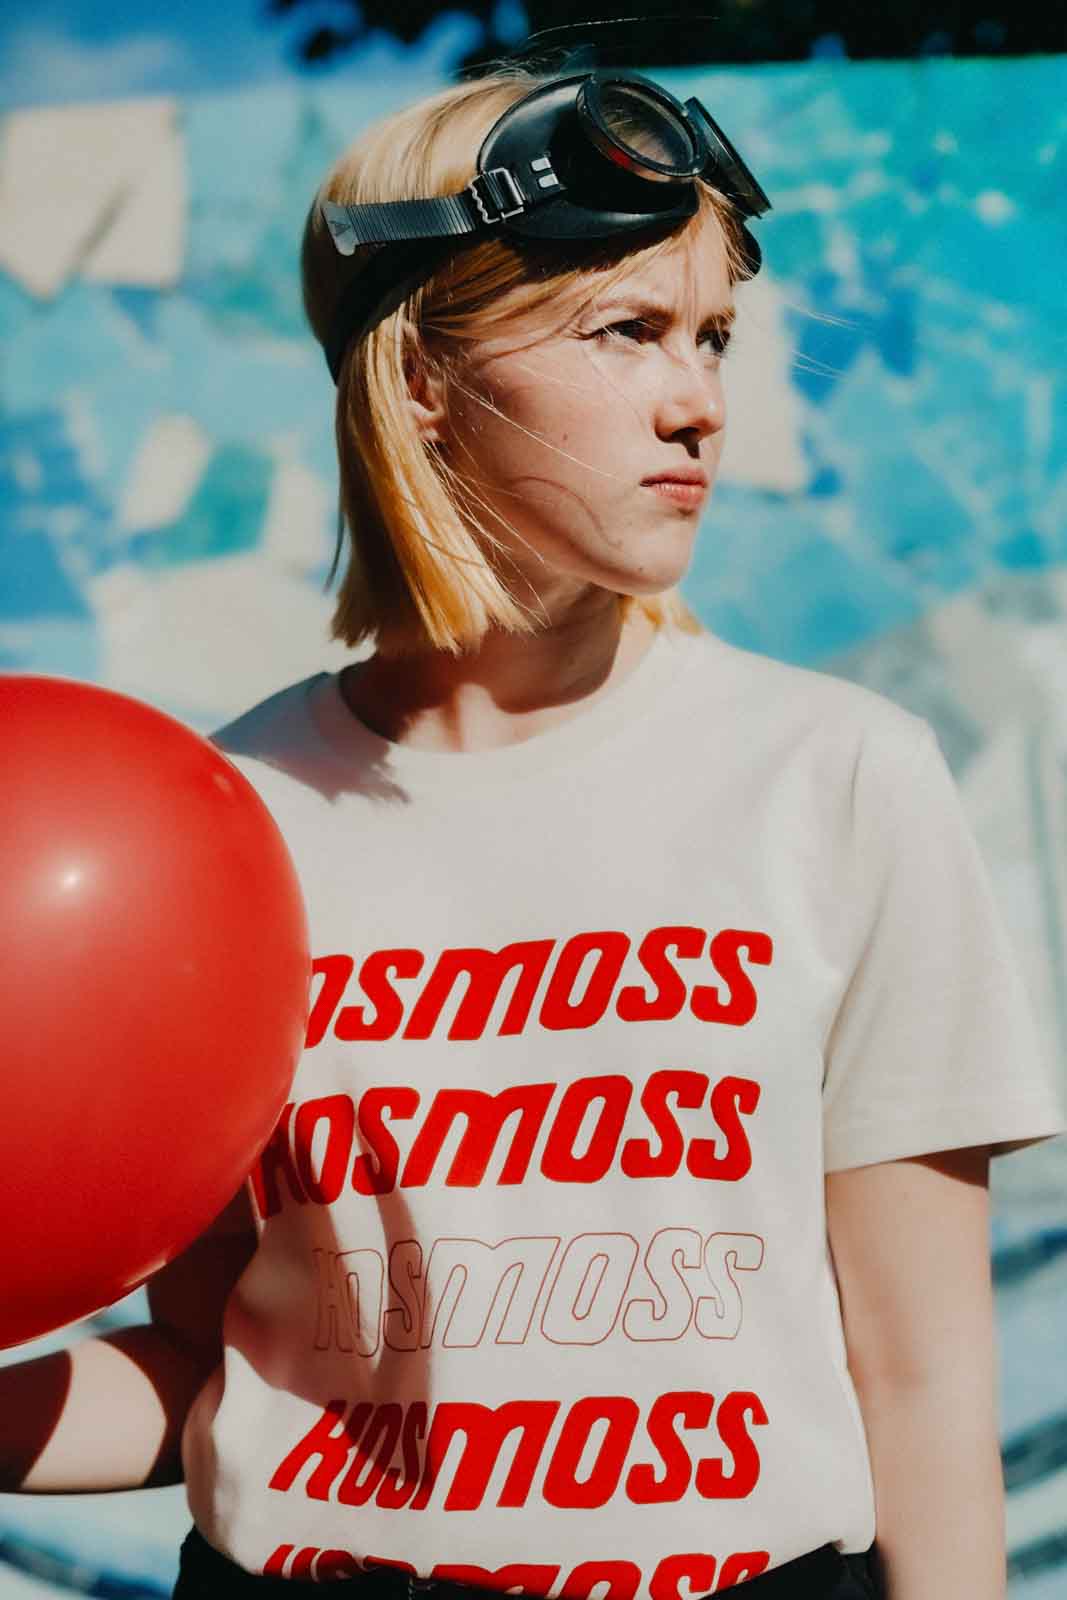 Kosmoss - The Universe Organic Cotton T-shirt